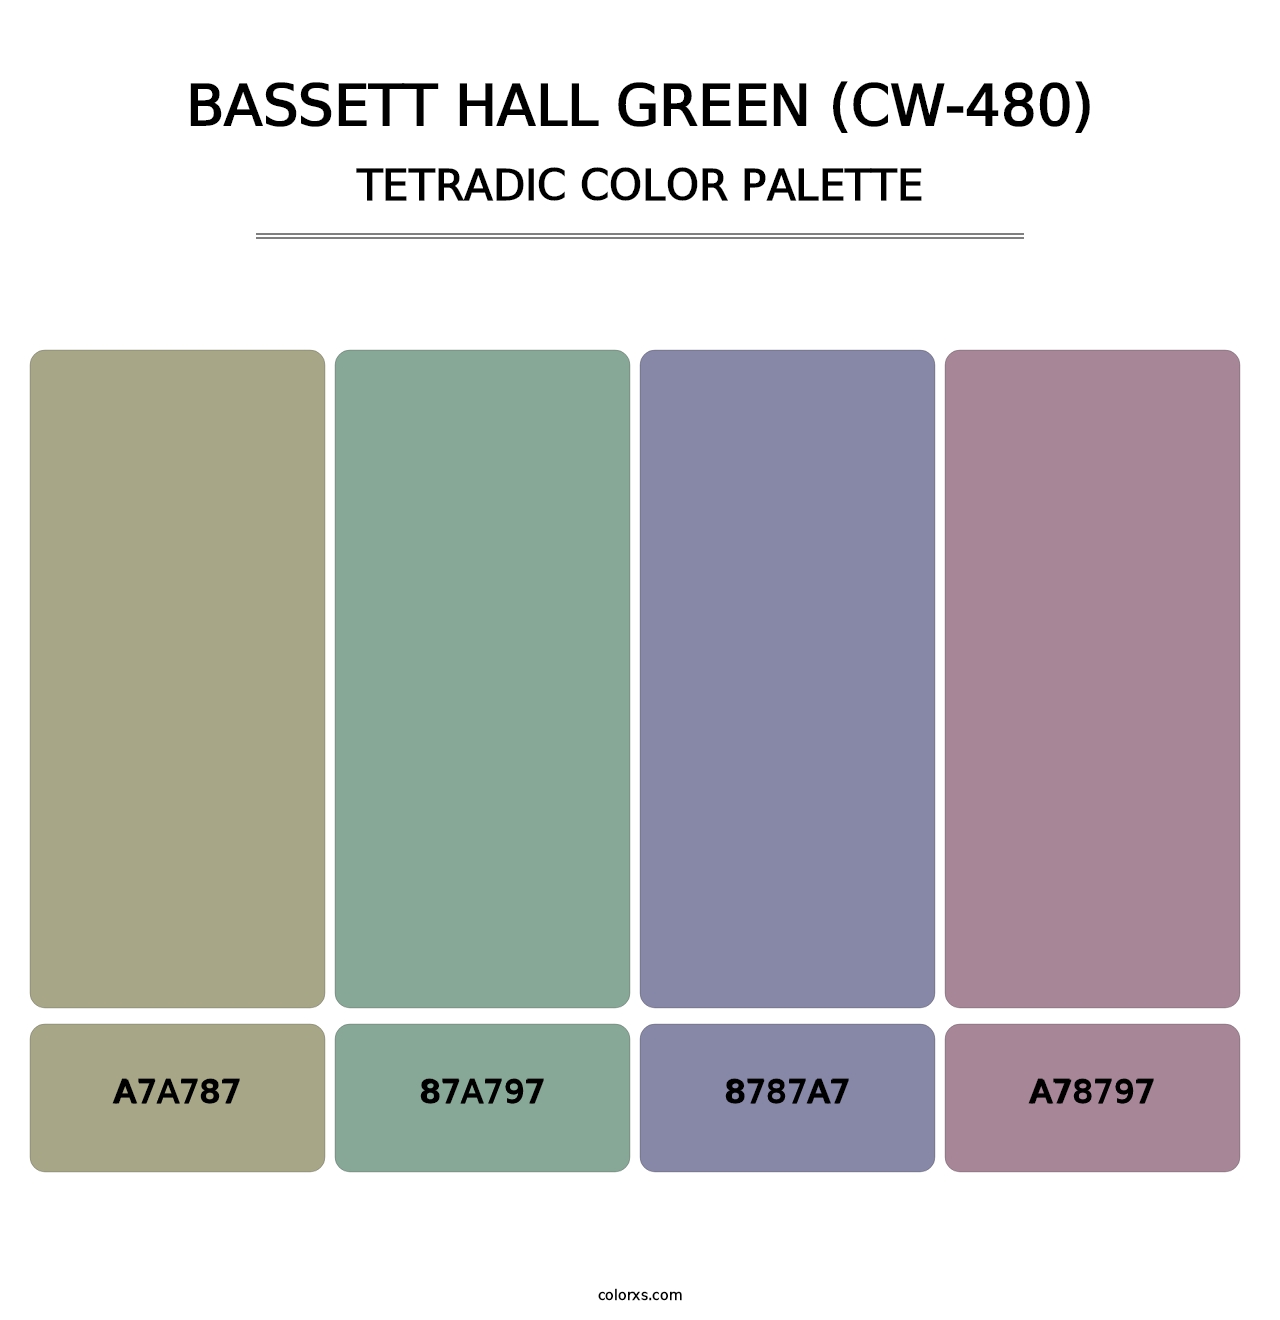 Bassett Hall Green (CW-480) - Tetradic Color Palette